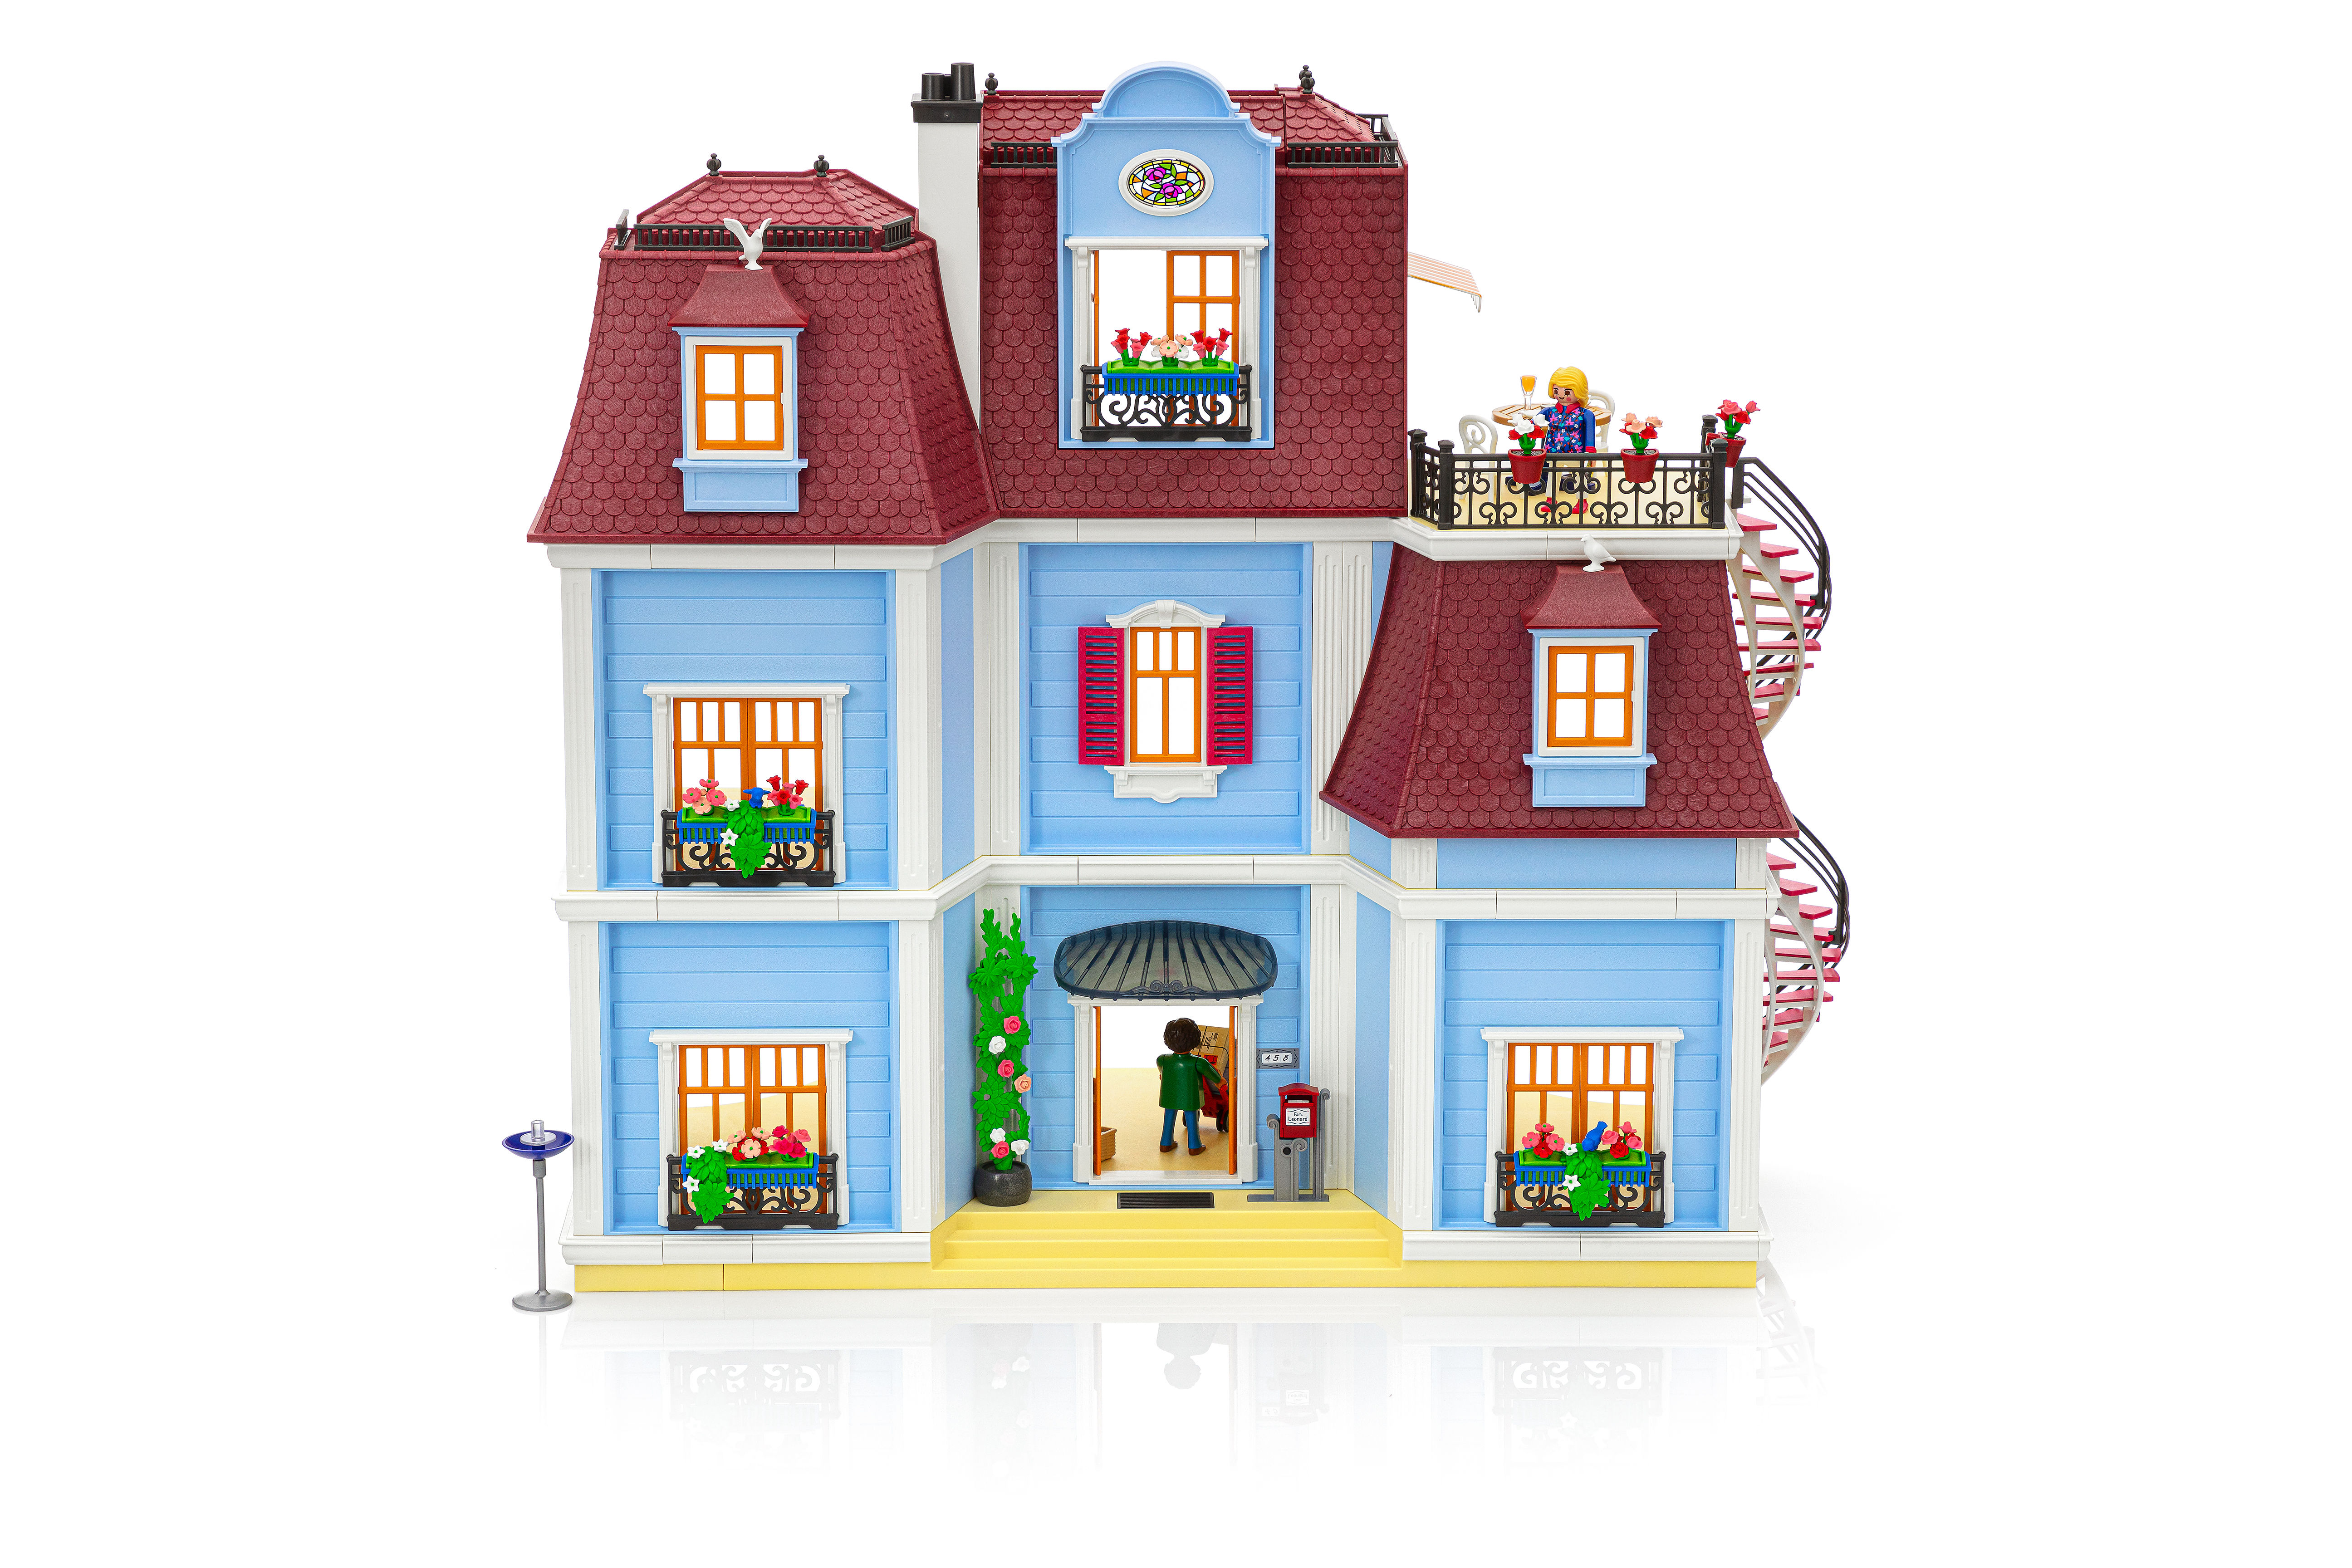 70986 - Playmobil City Life - Etage supplémentaire aménagé Maison Moderne  Playmobil : King Jouet, Playmobil Playmobil - Jeux d'imitation & Mondes  imaginaires